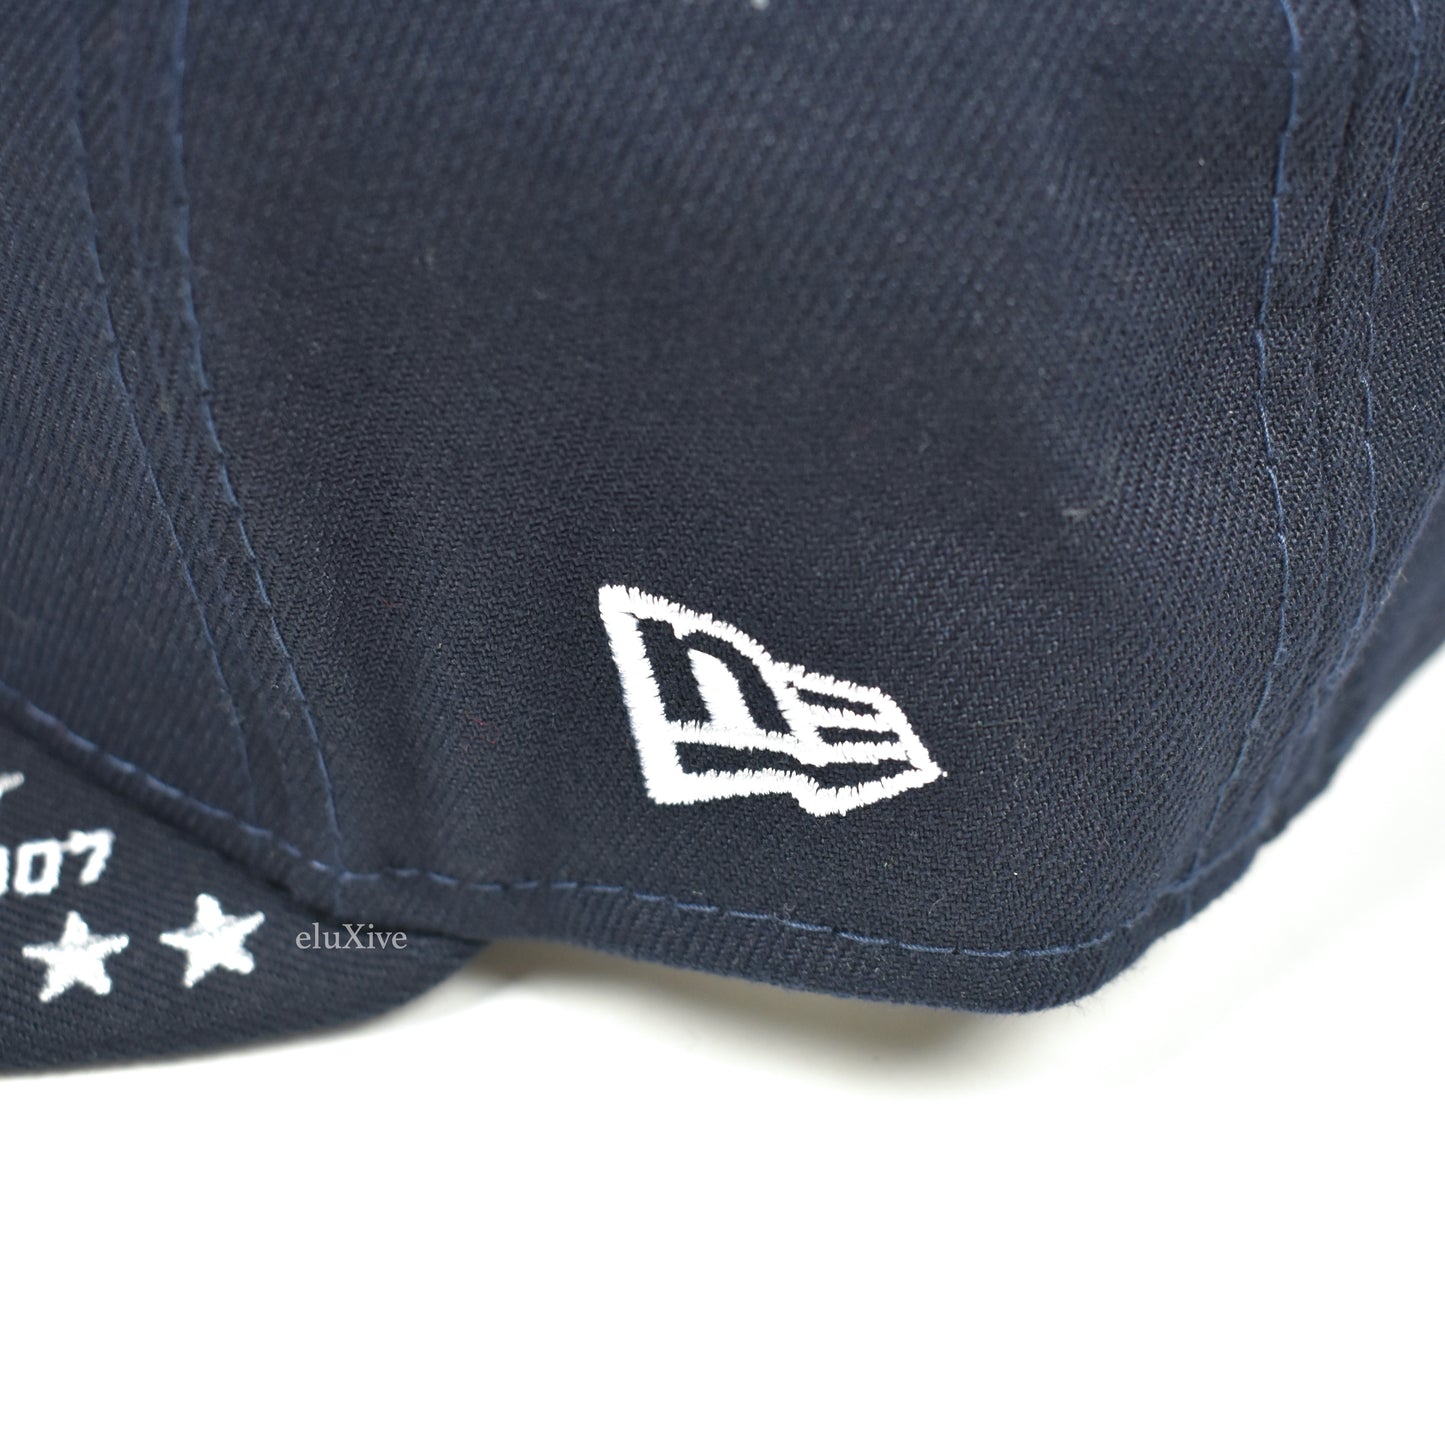 New Era x Supreme Monogram Box Logo Cap - Green Hats, Accessories -  WERSU20370